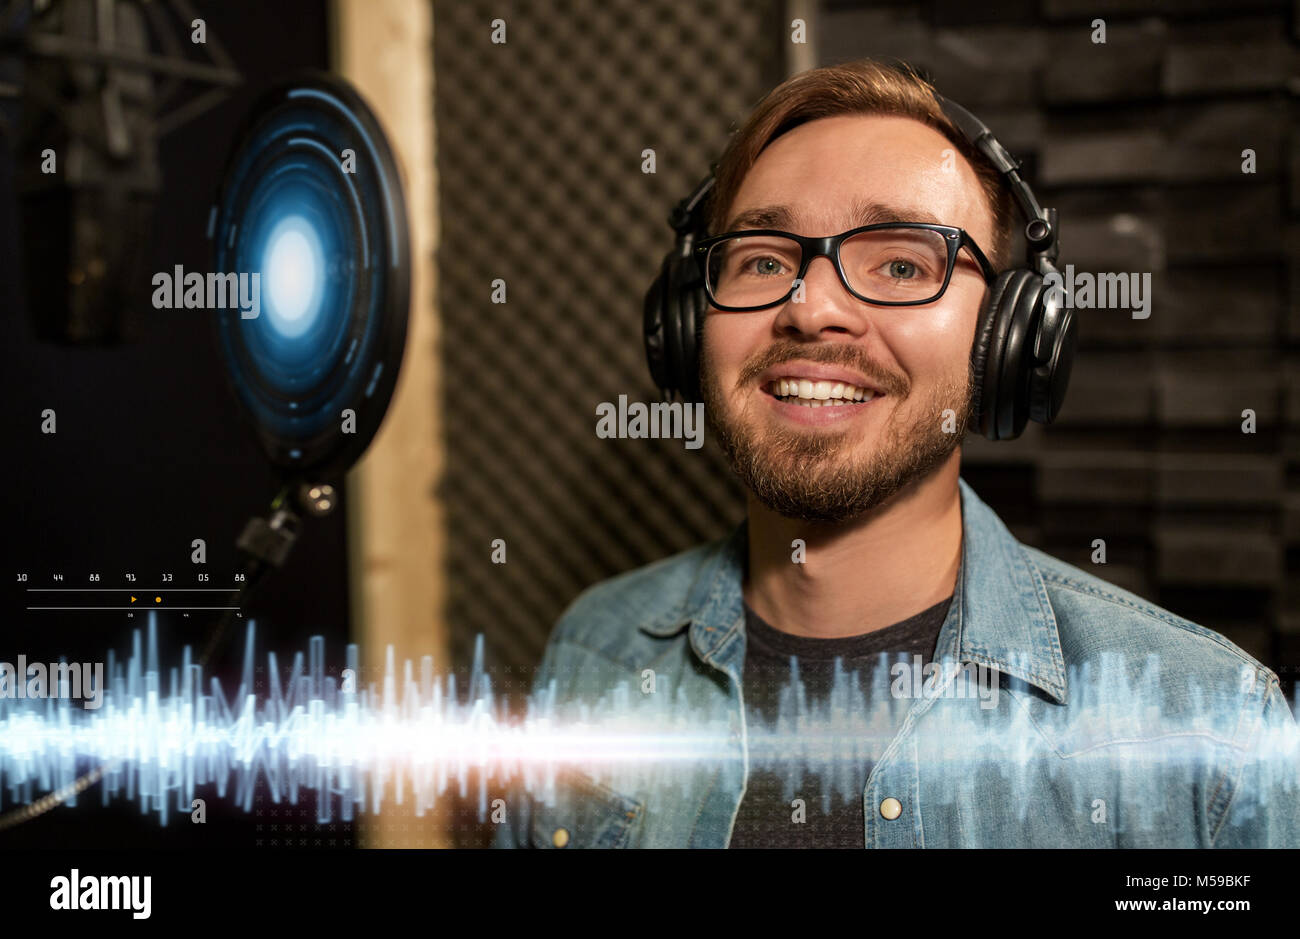 man with headphones singing at recording studio Stock Photo